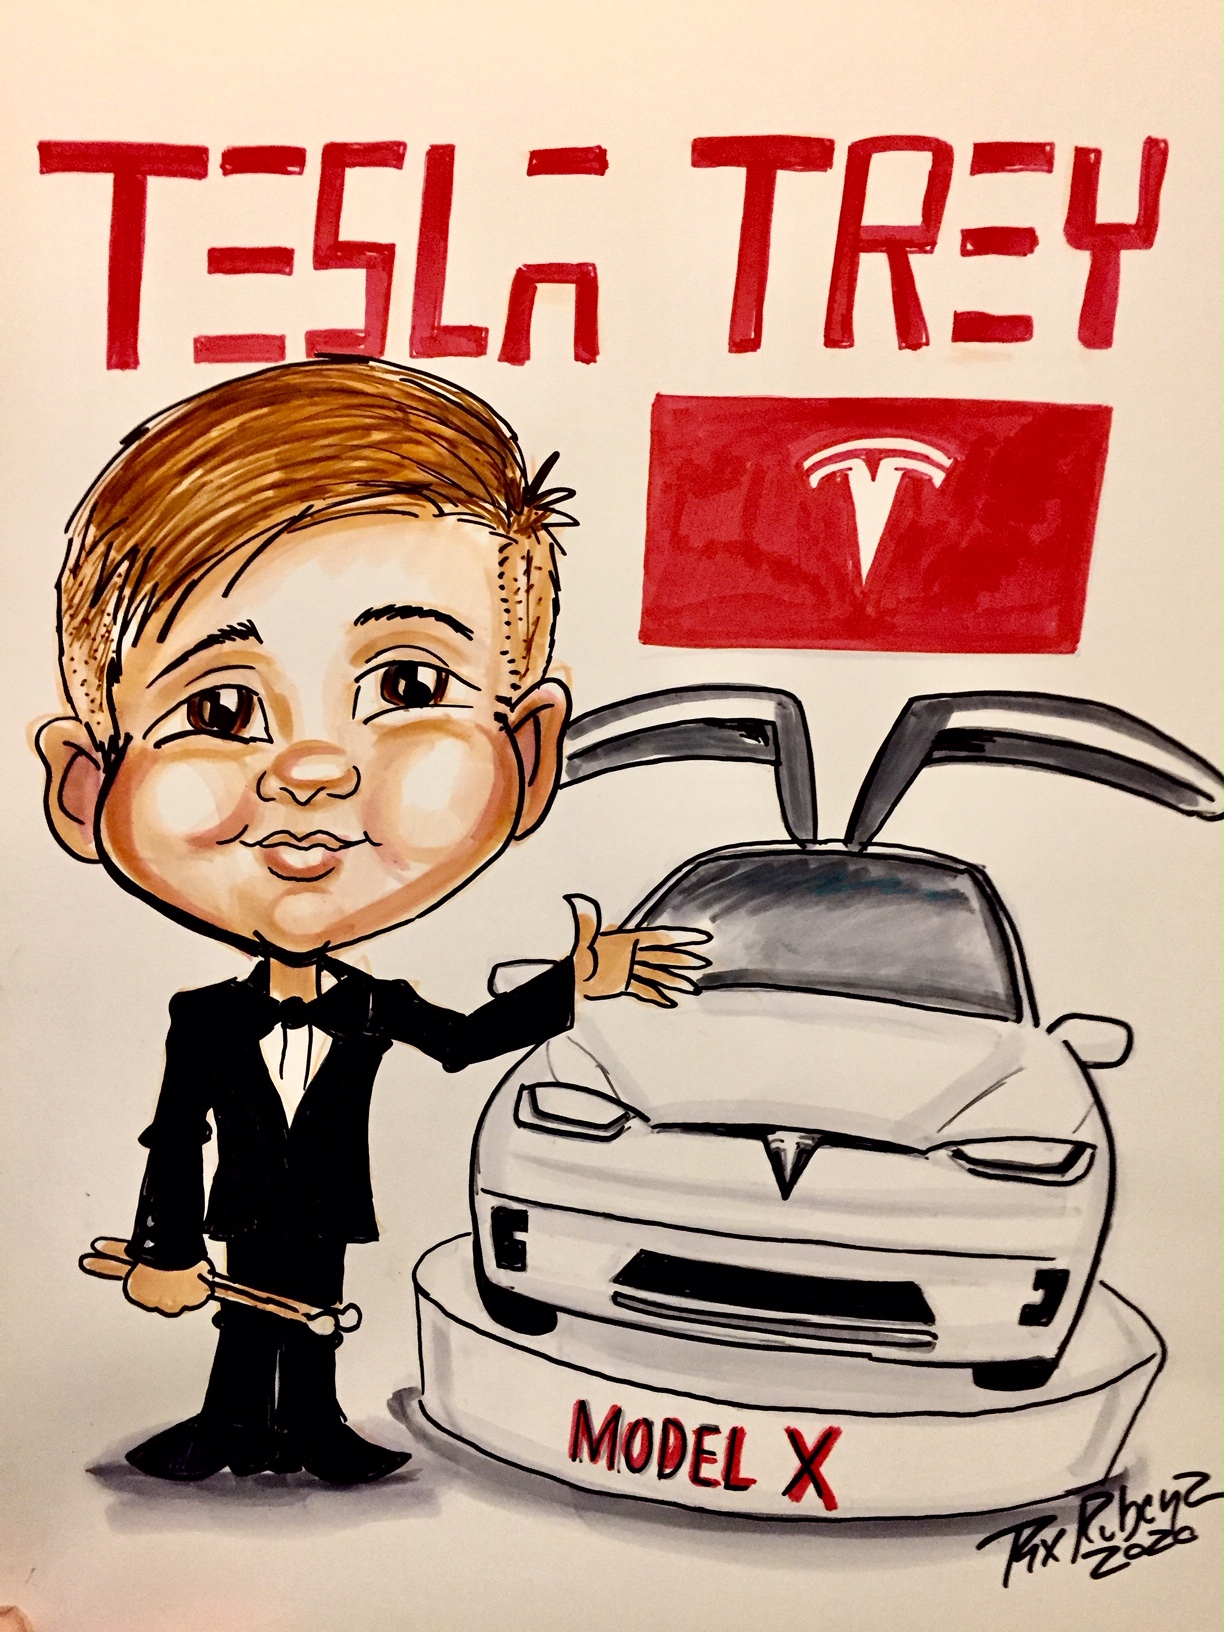 Caricature of Tesla model X